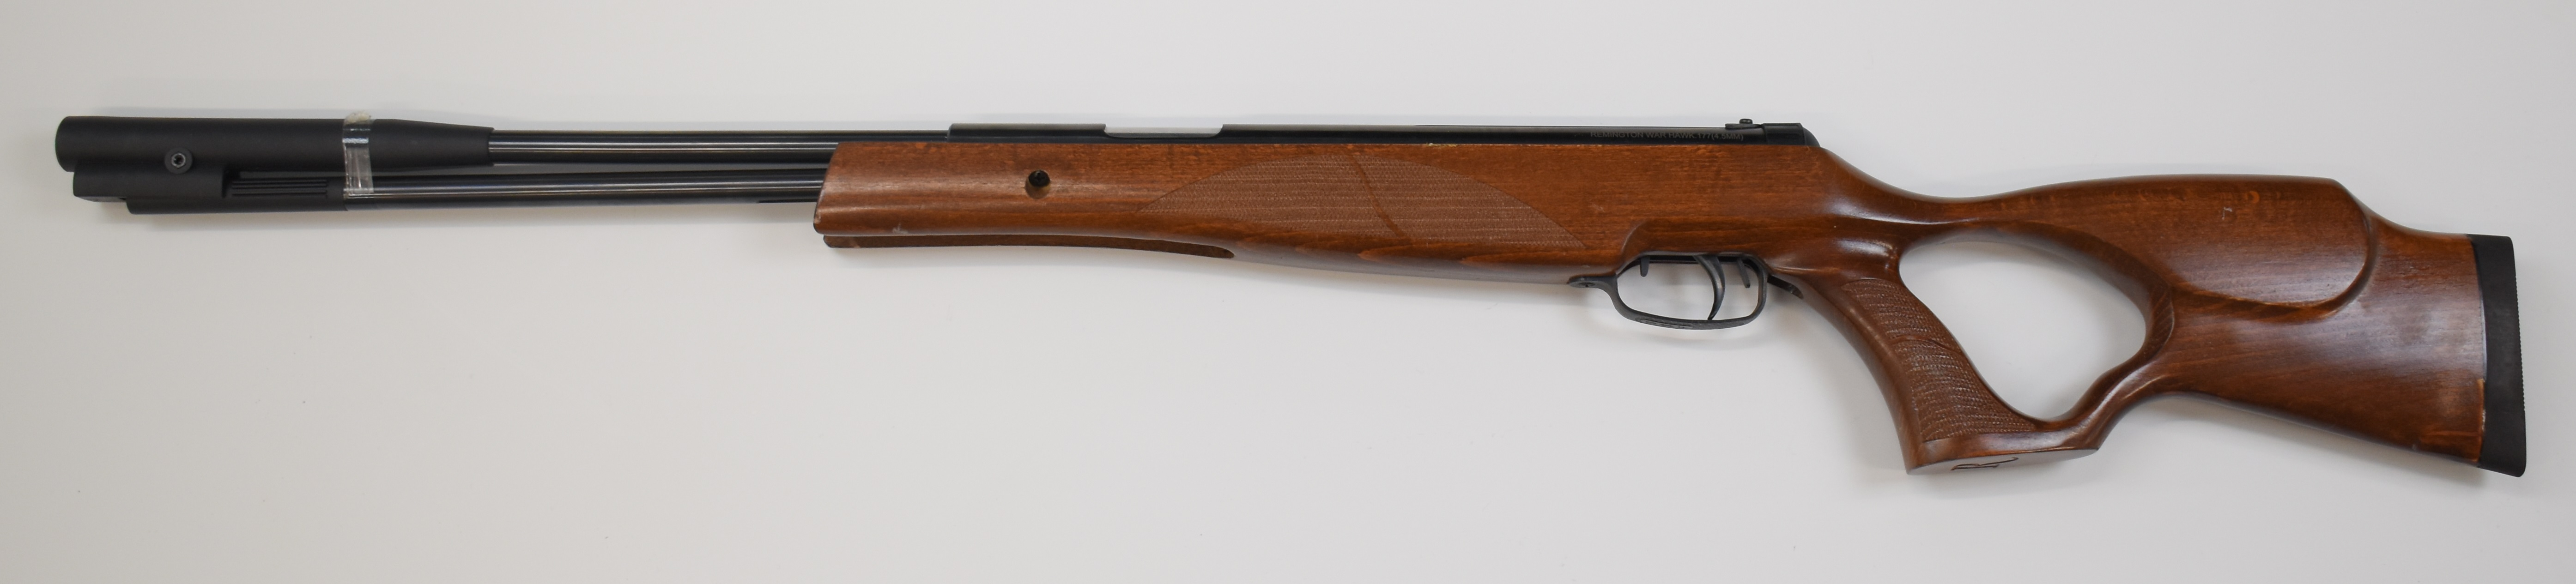 Remington Warhawk .177 under-lever air rifle with textured semi-pistol grip, raised cheek piece - Image 7 of 11